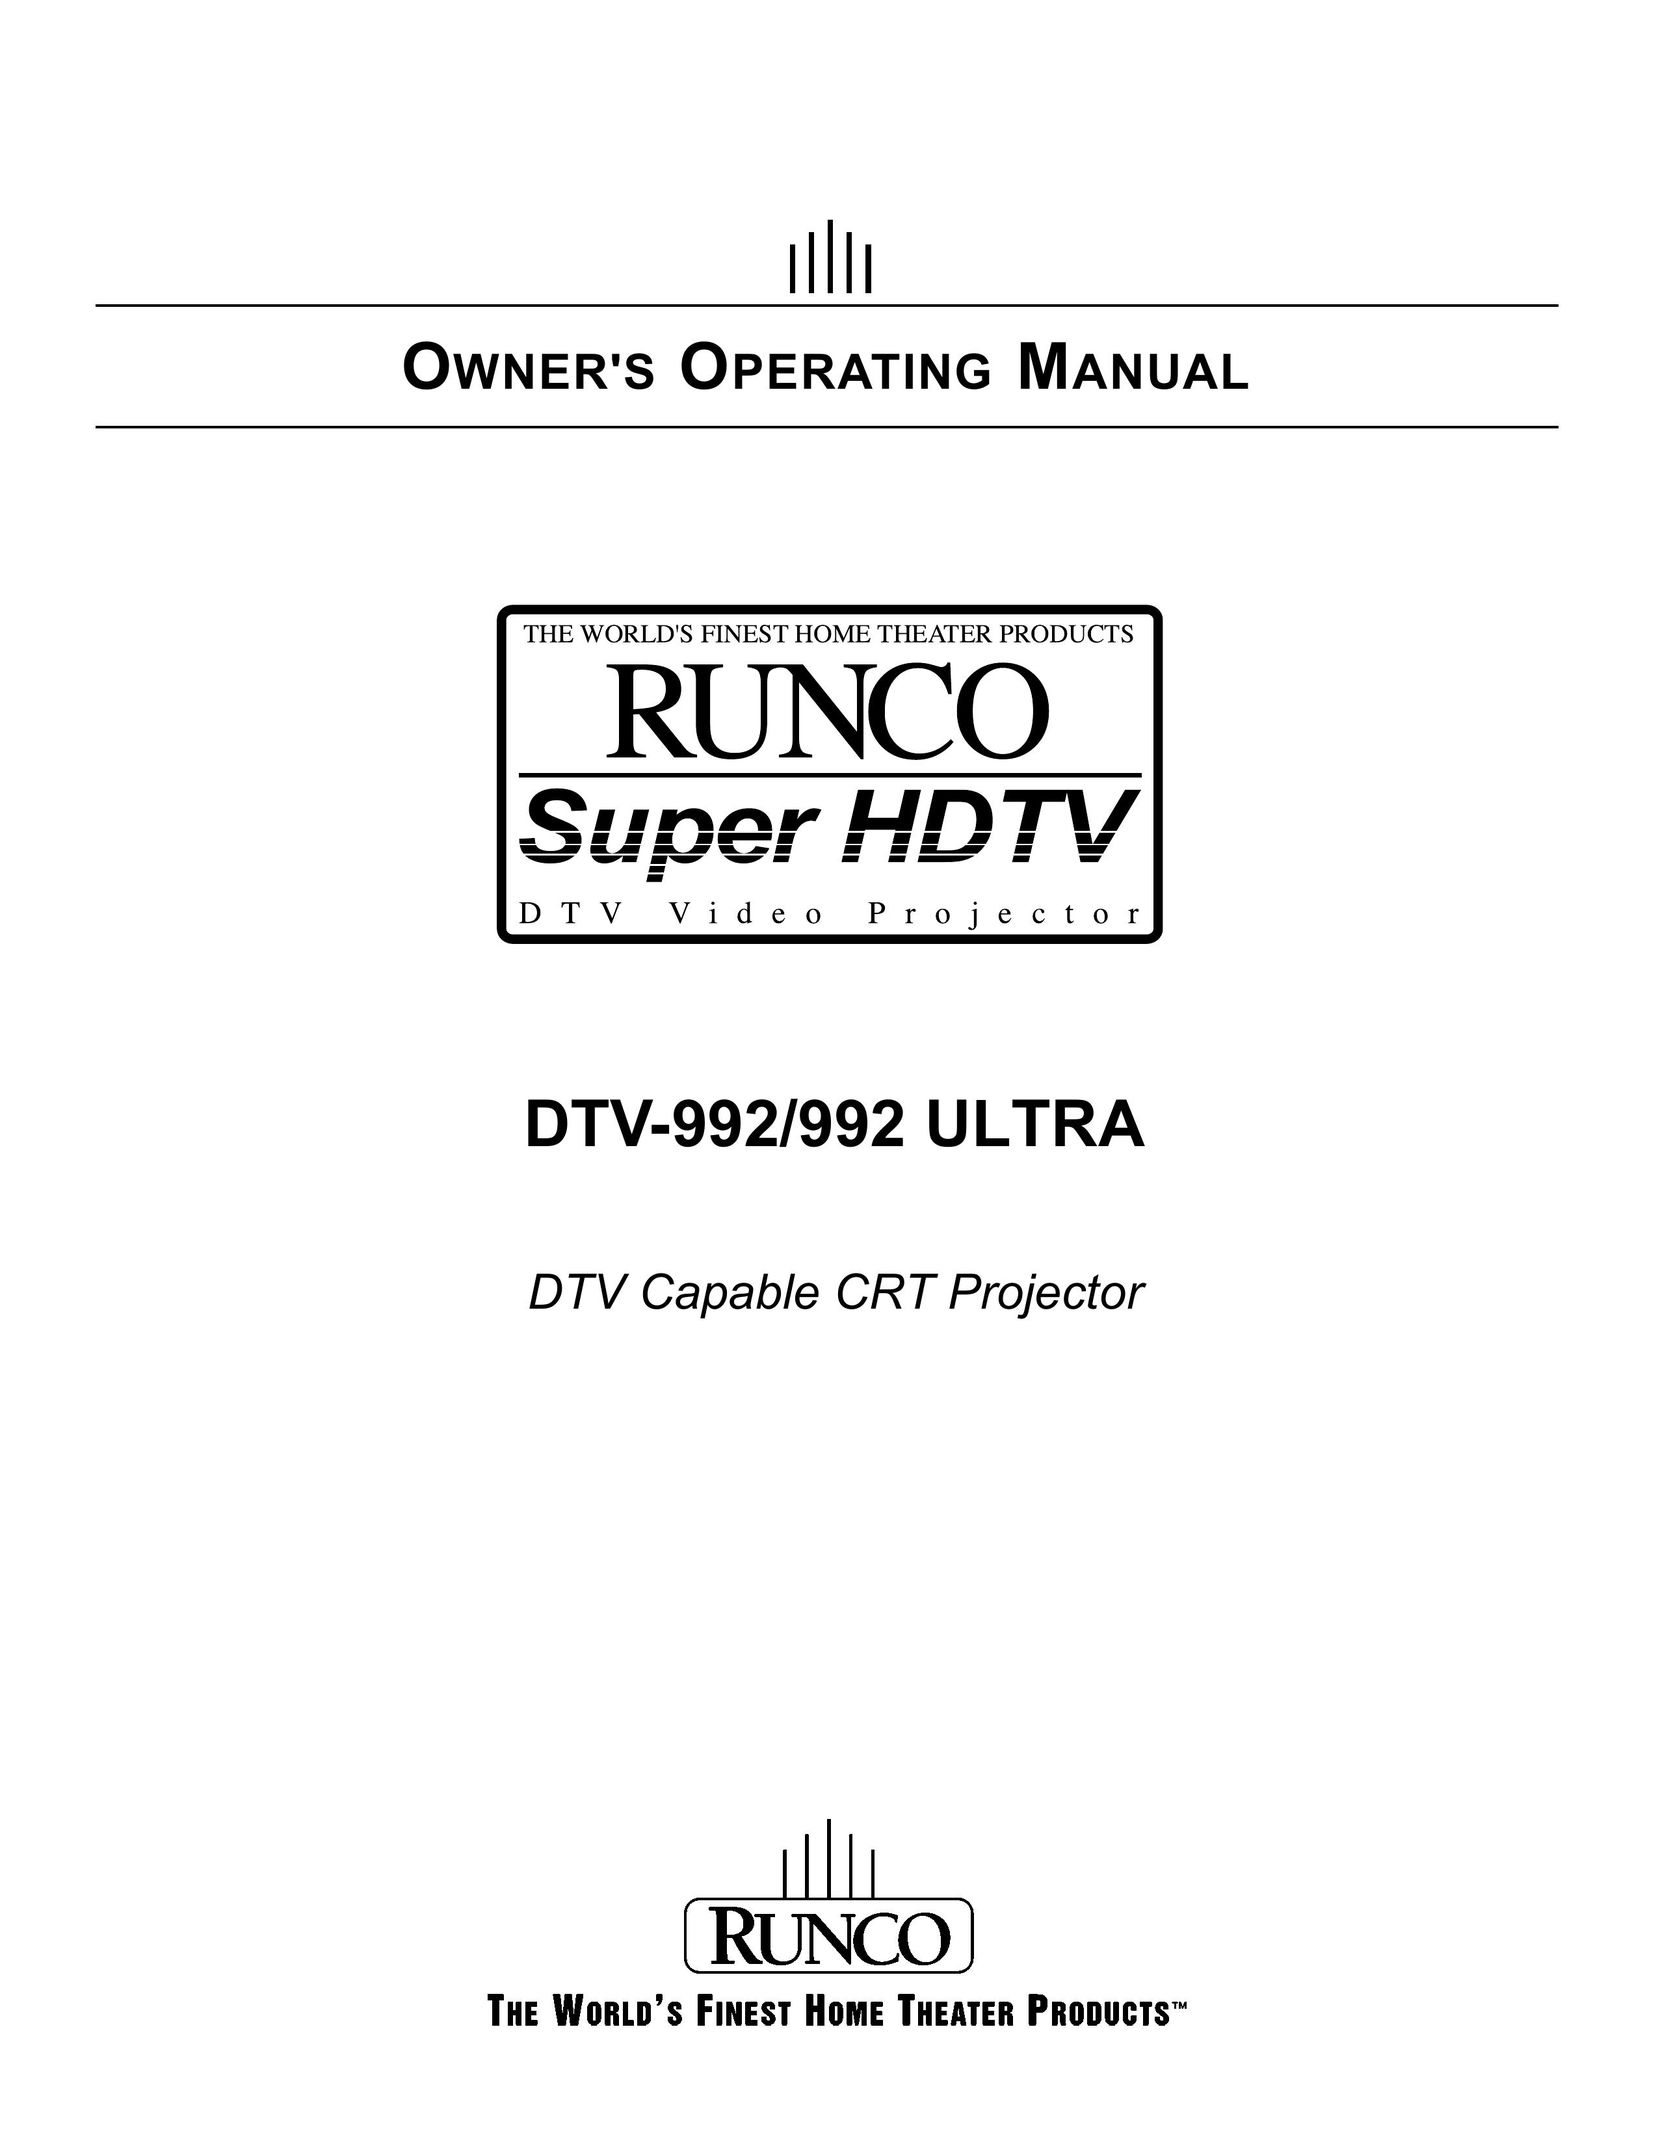 Runco runco super hdtv dtv video projector Flat Panel Television User Manual